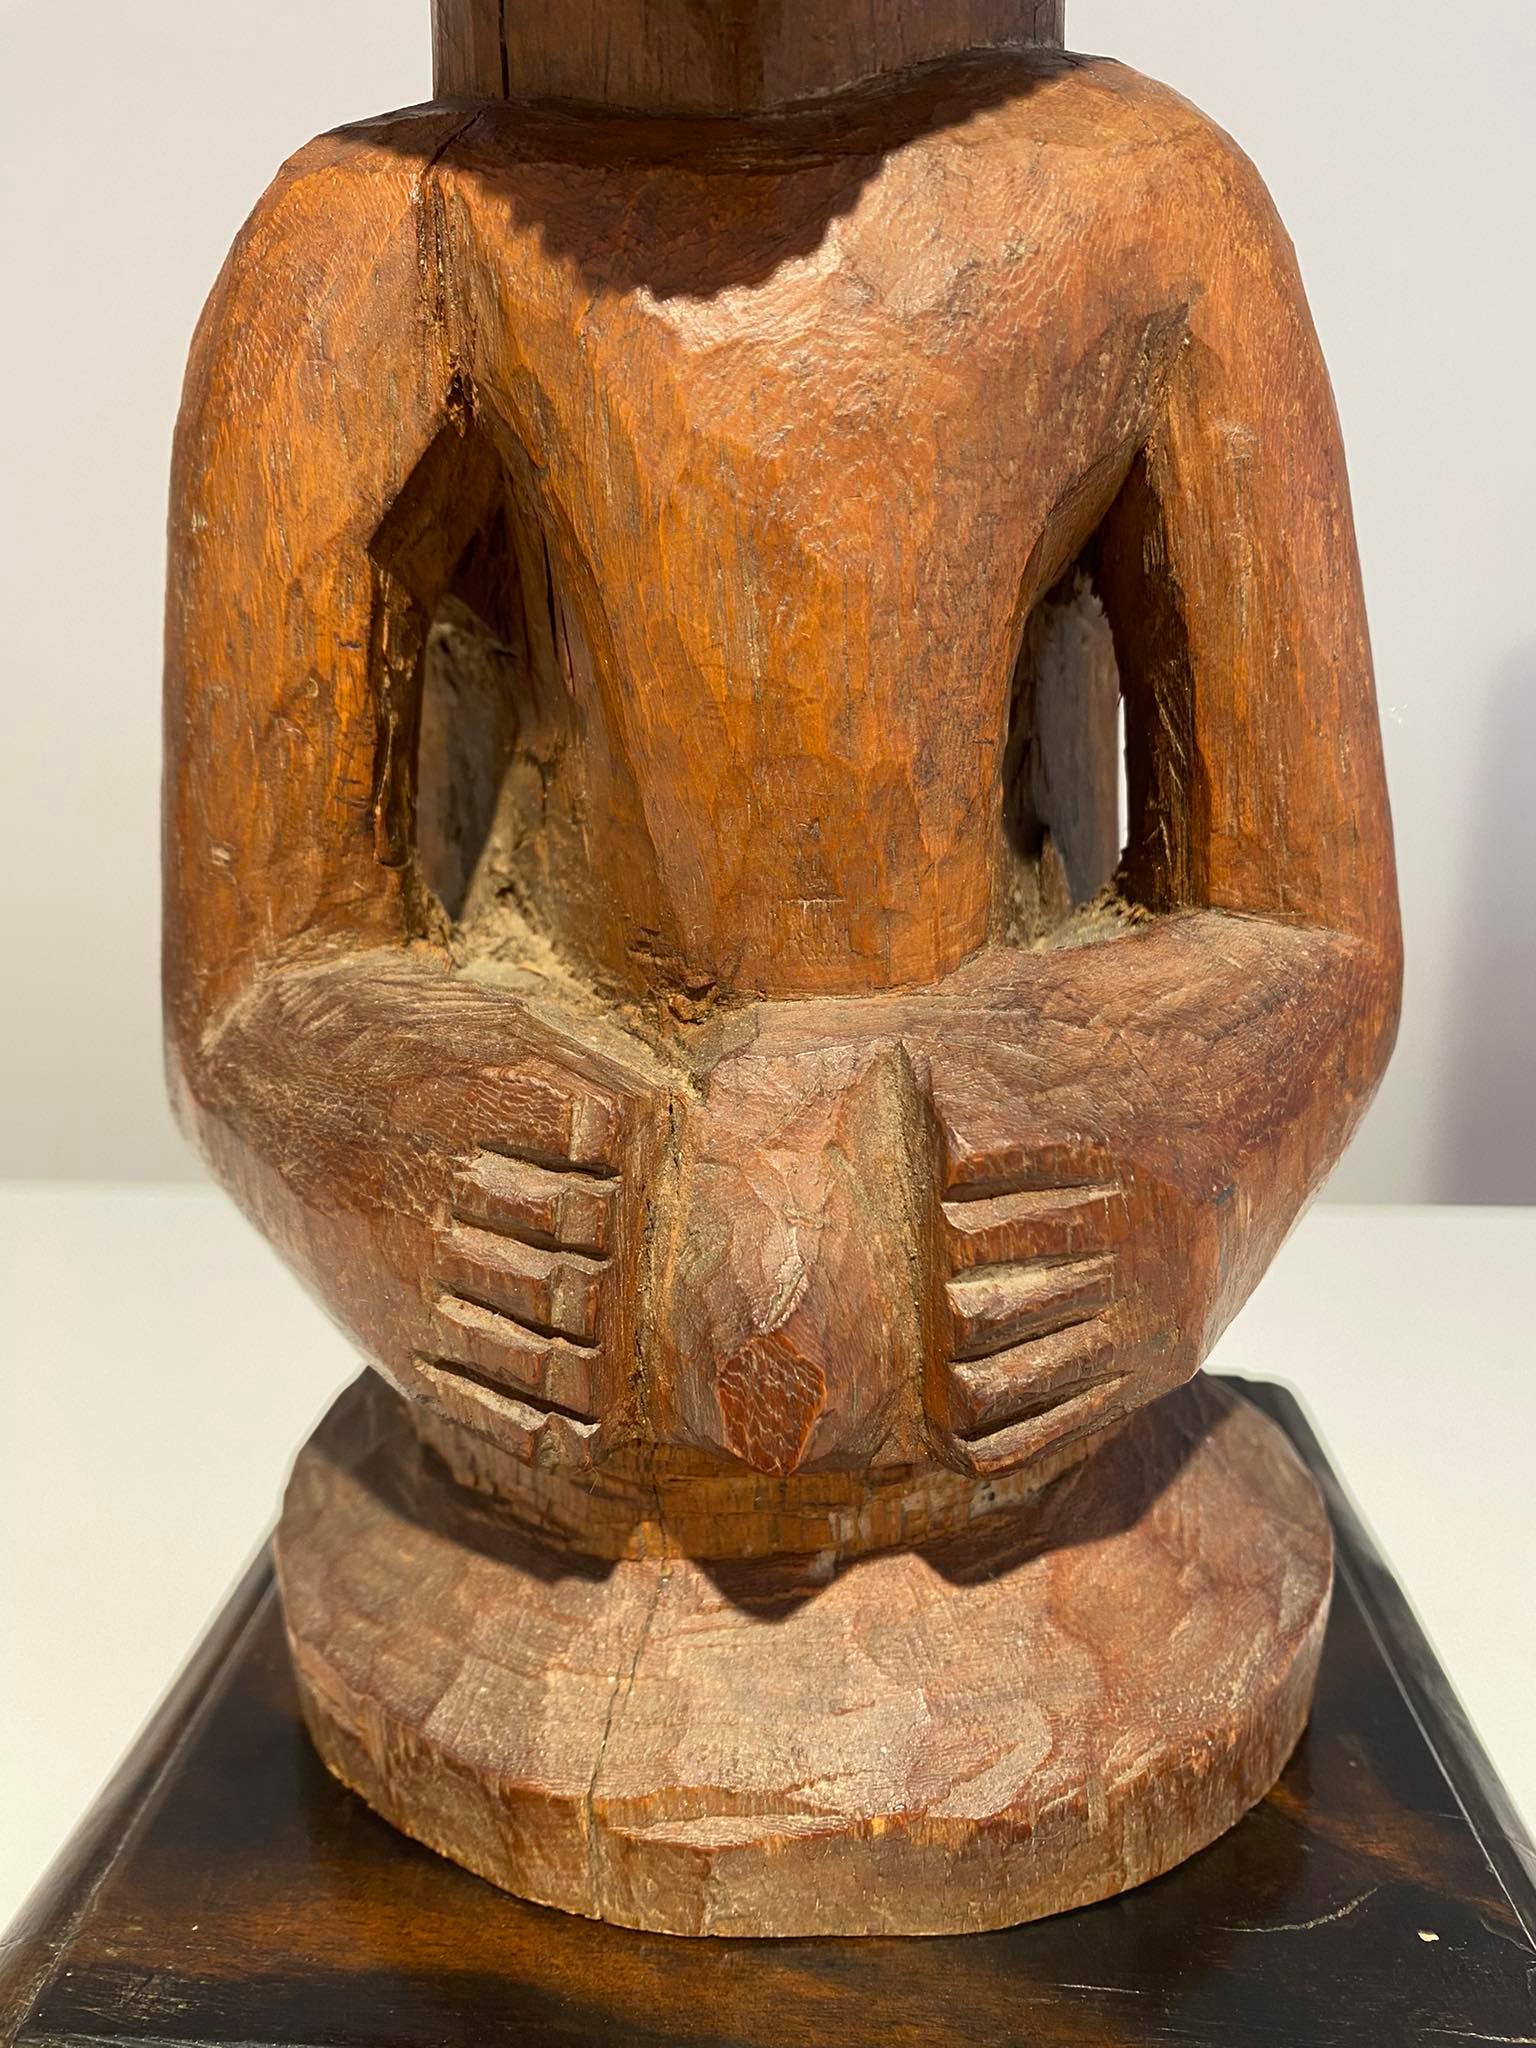 Kusu wooden ancestor fetish ca 1900 DR Congo Africa Central African Tribal Art For Sale 6